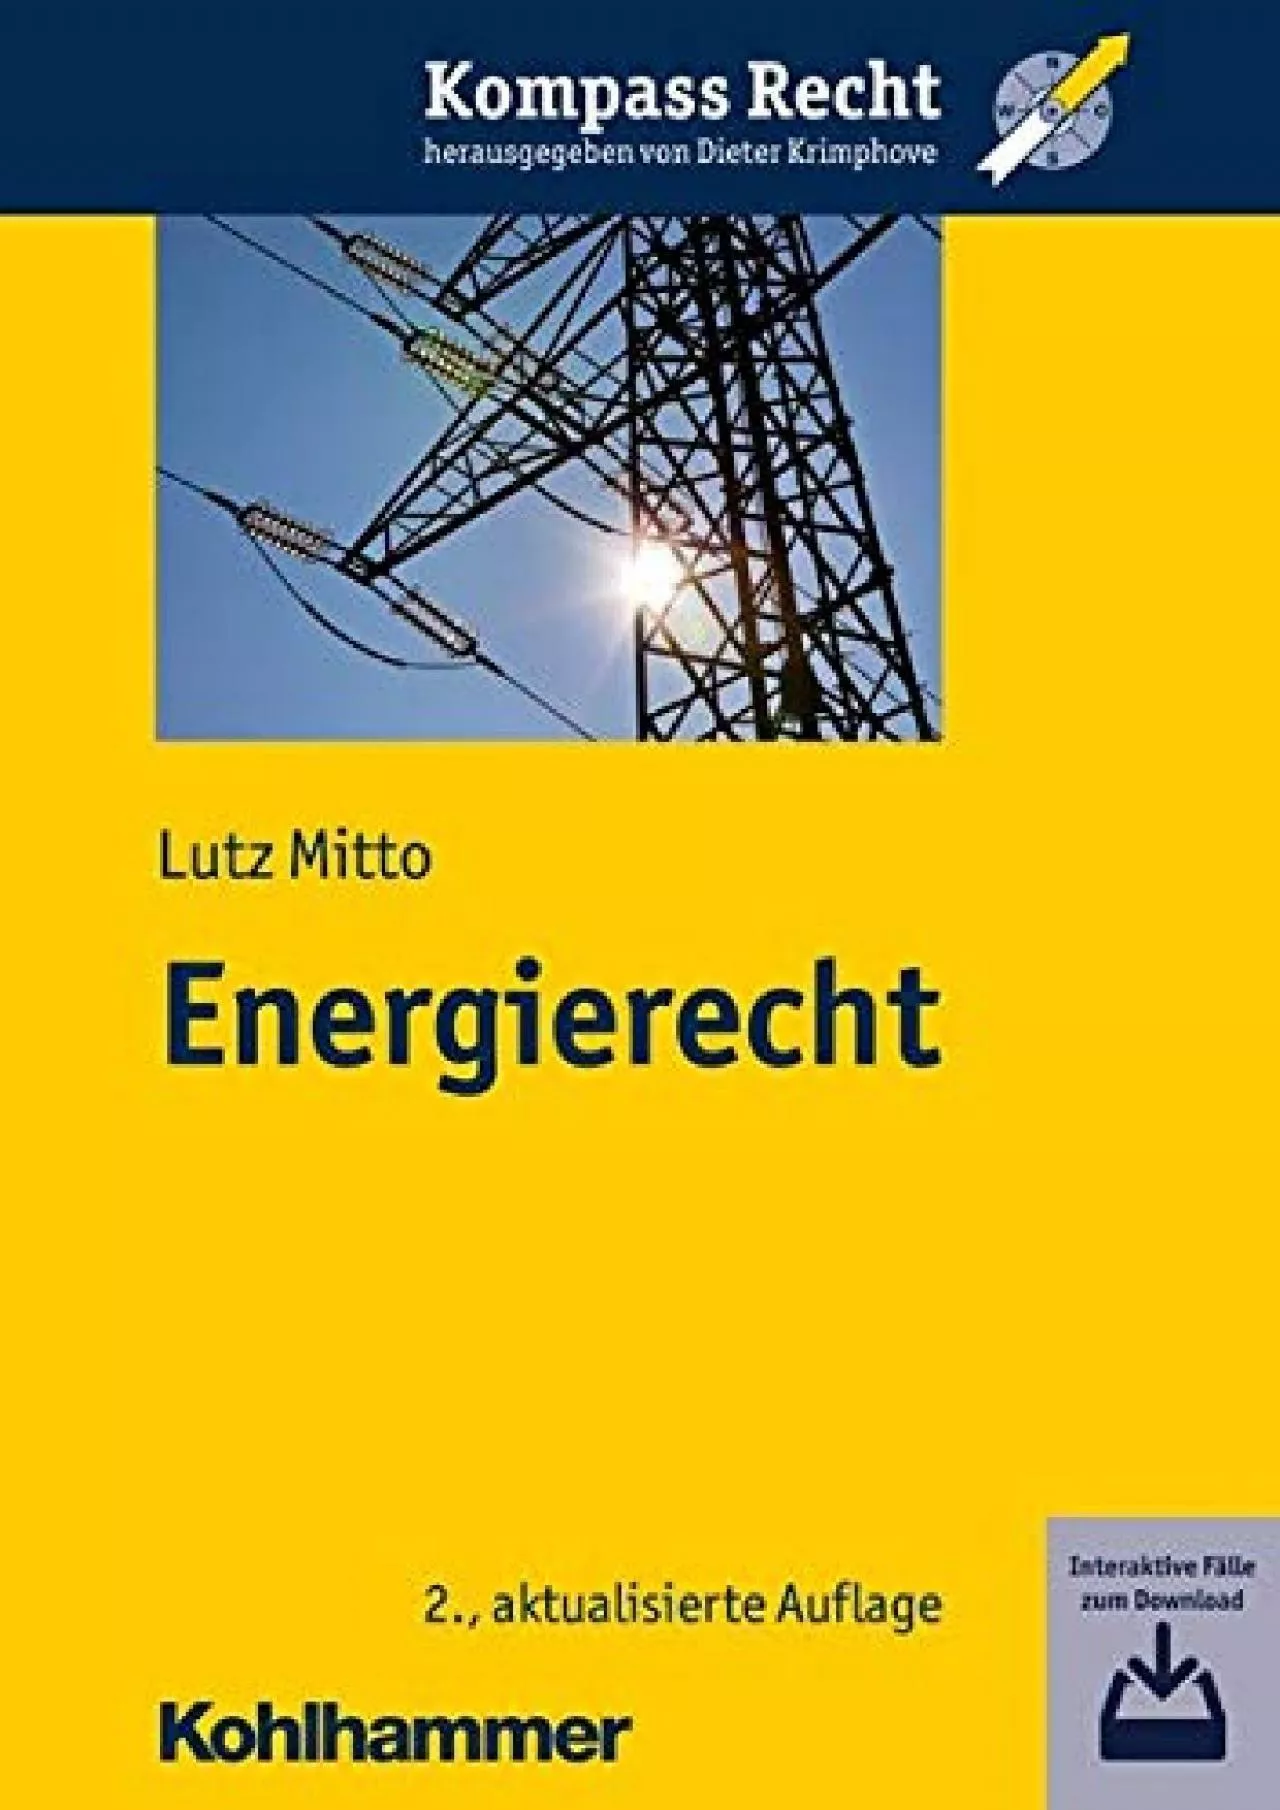 [READ DOWNLOAD] Energierecht (Kompass Recht) (German Edition)